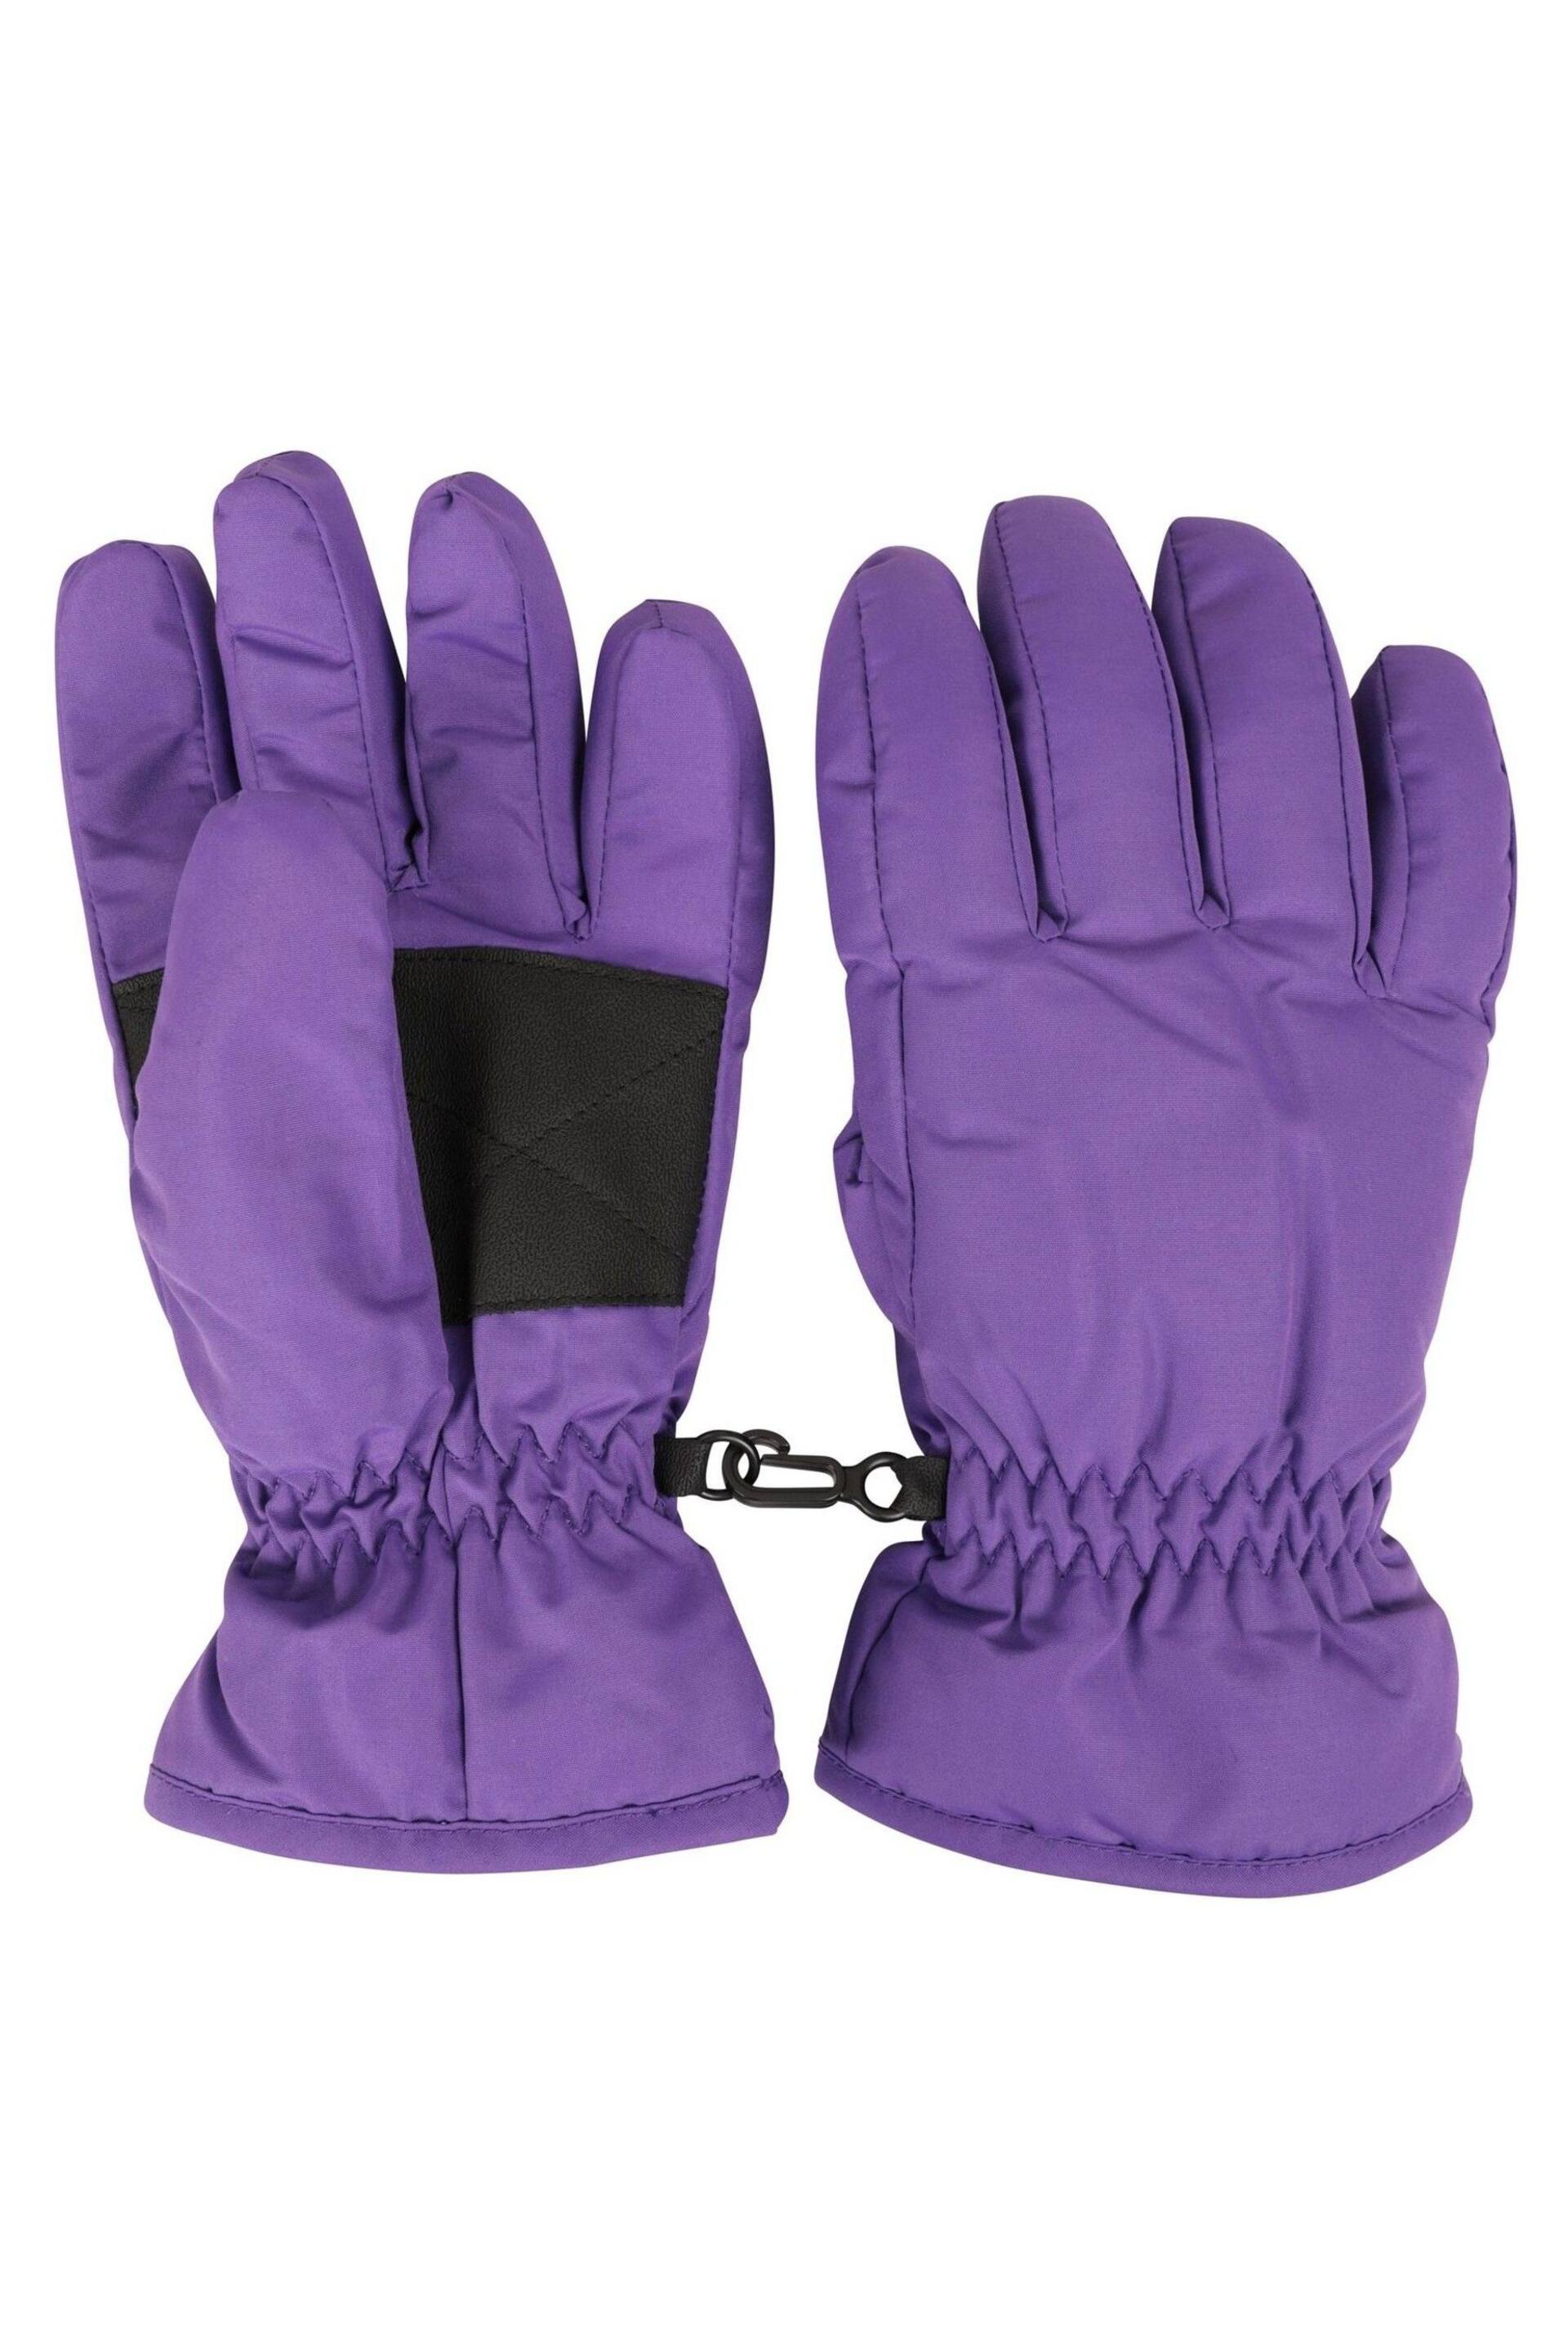 Mountain Warehouse Purple Kids Winter Accessories Set - Image 3 of 4